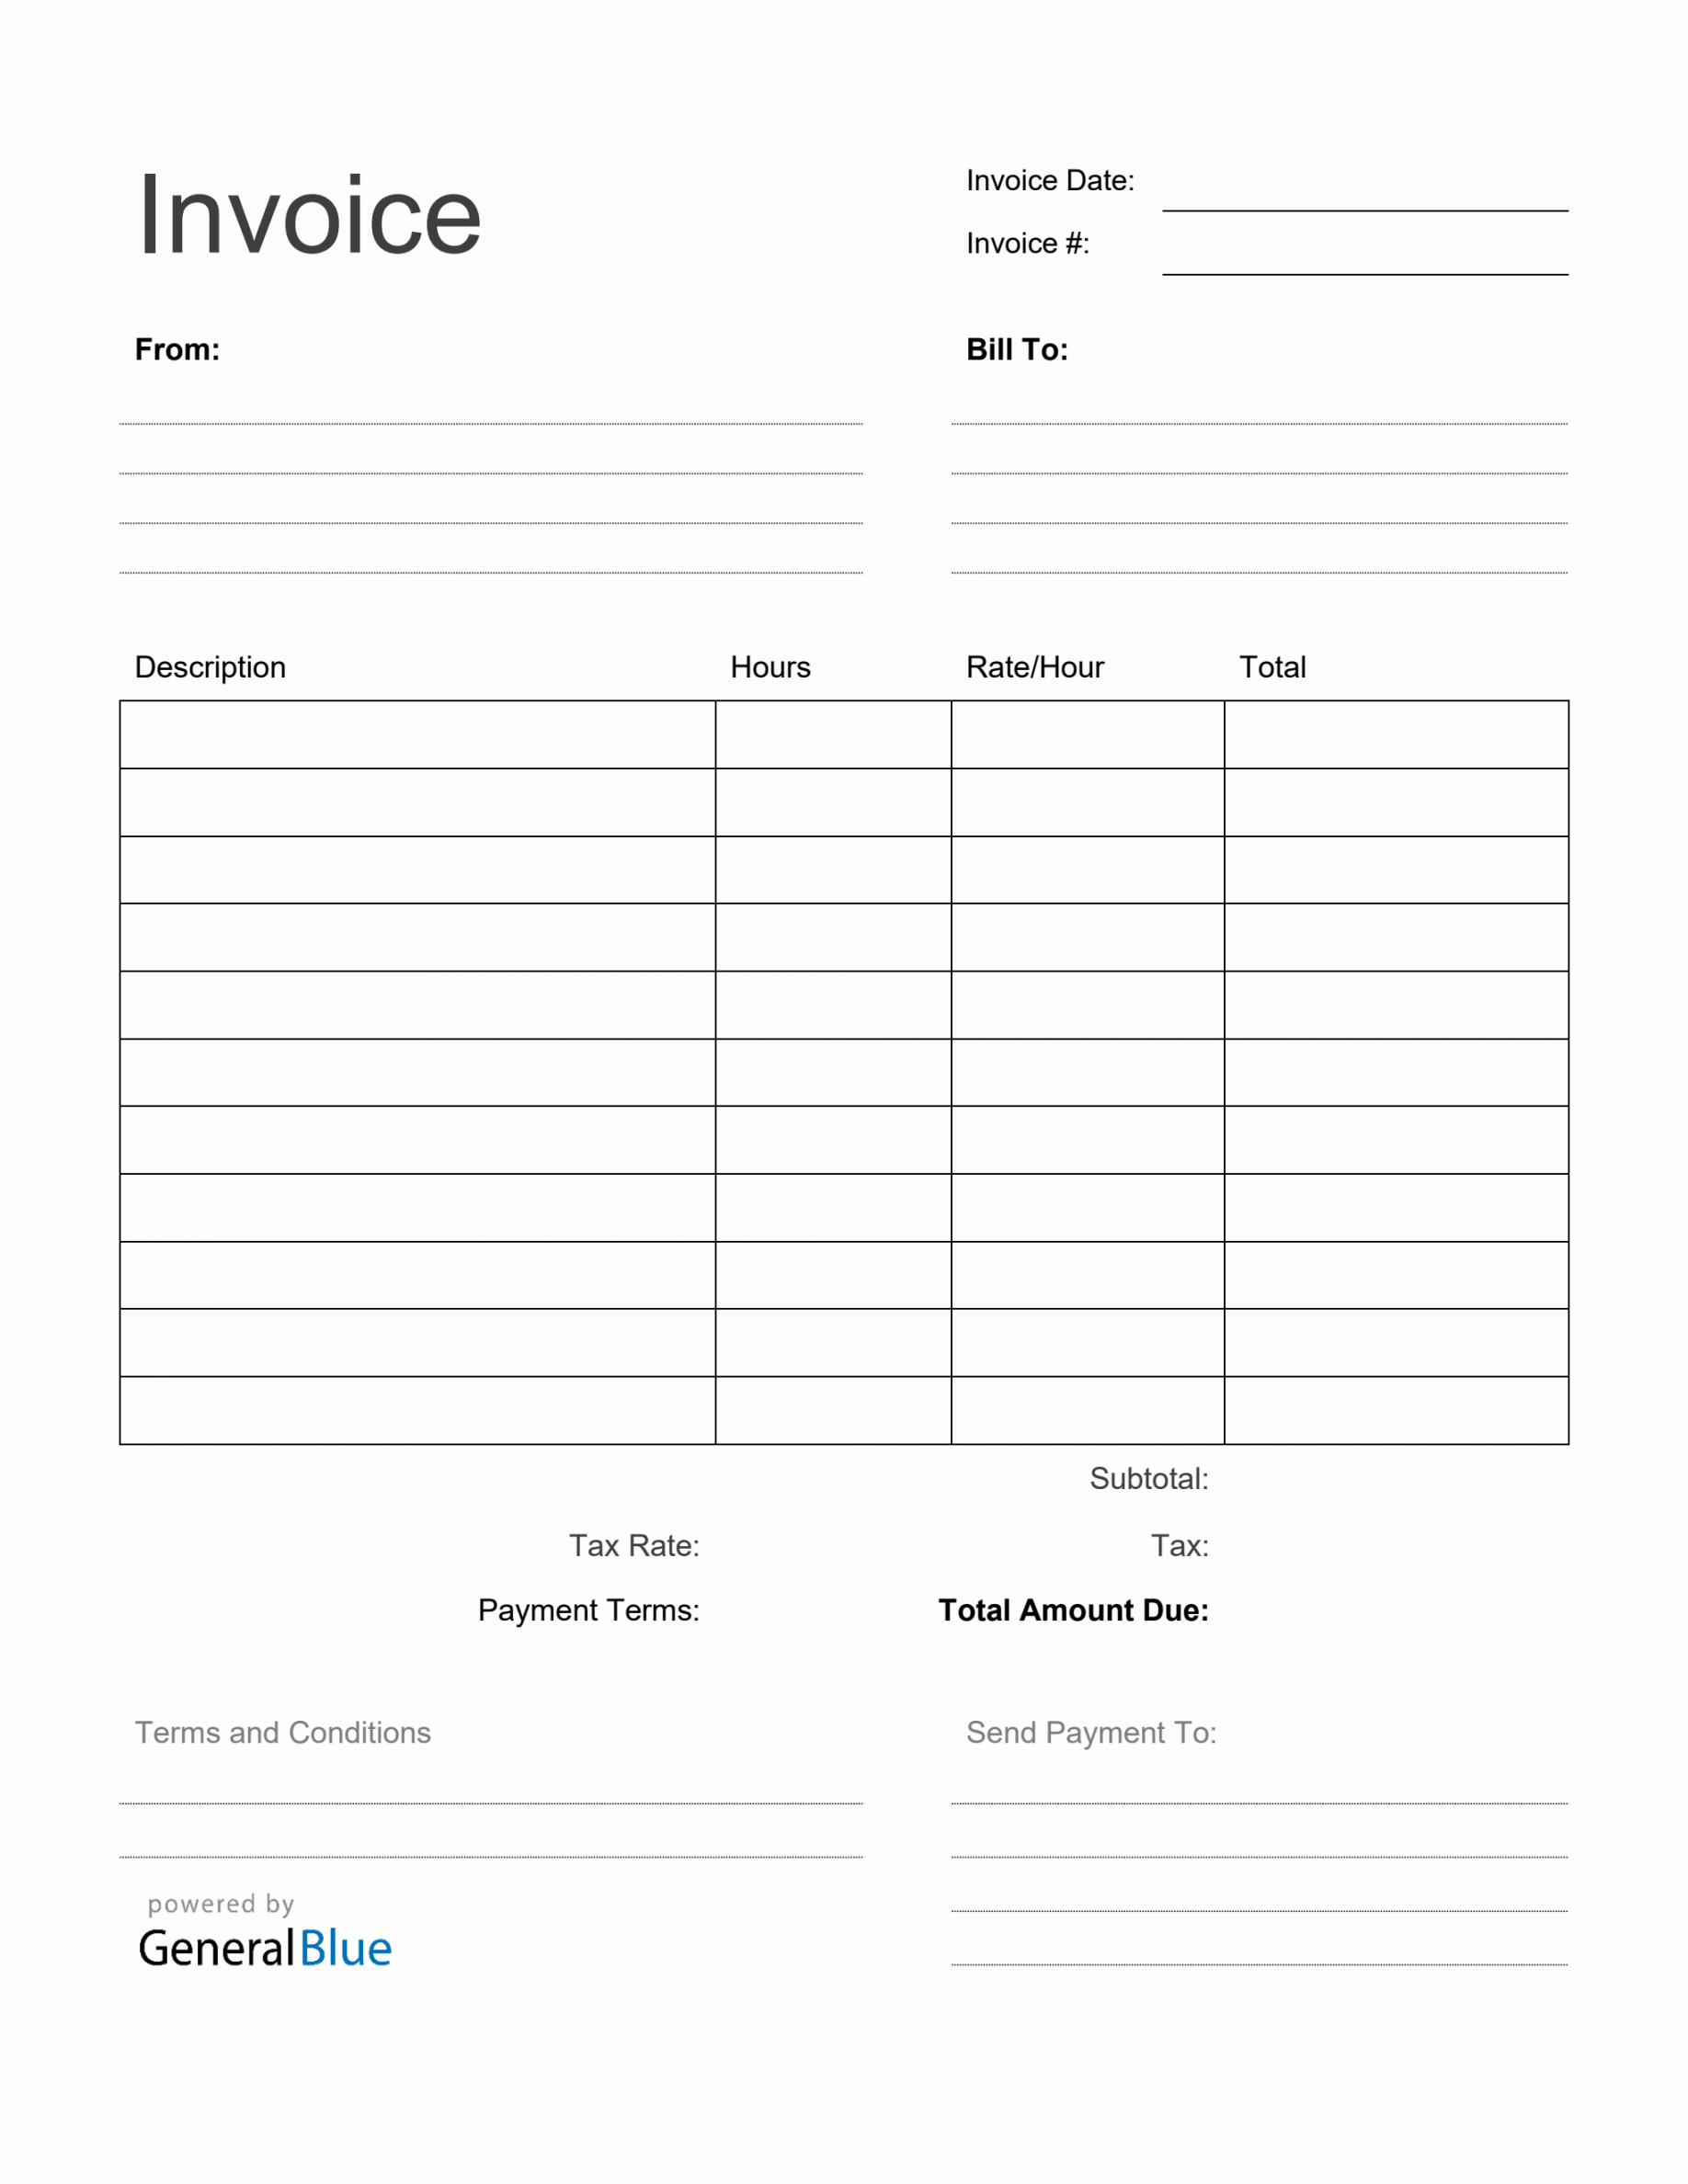 Invoice Template Free Printable - Printable - Blank Invoice Template in Word Printable